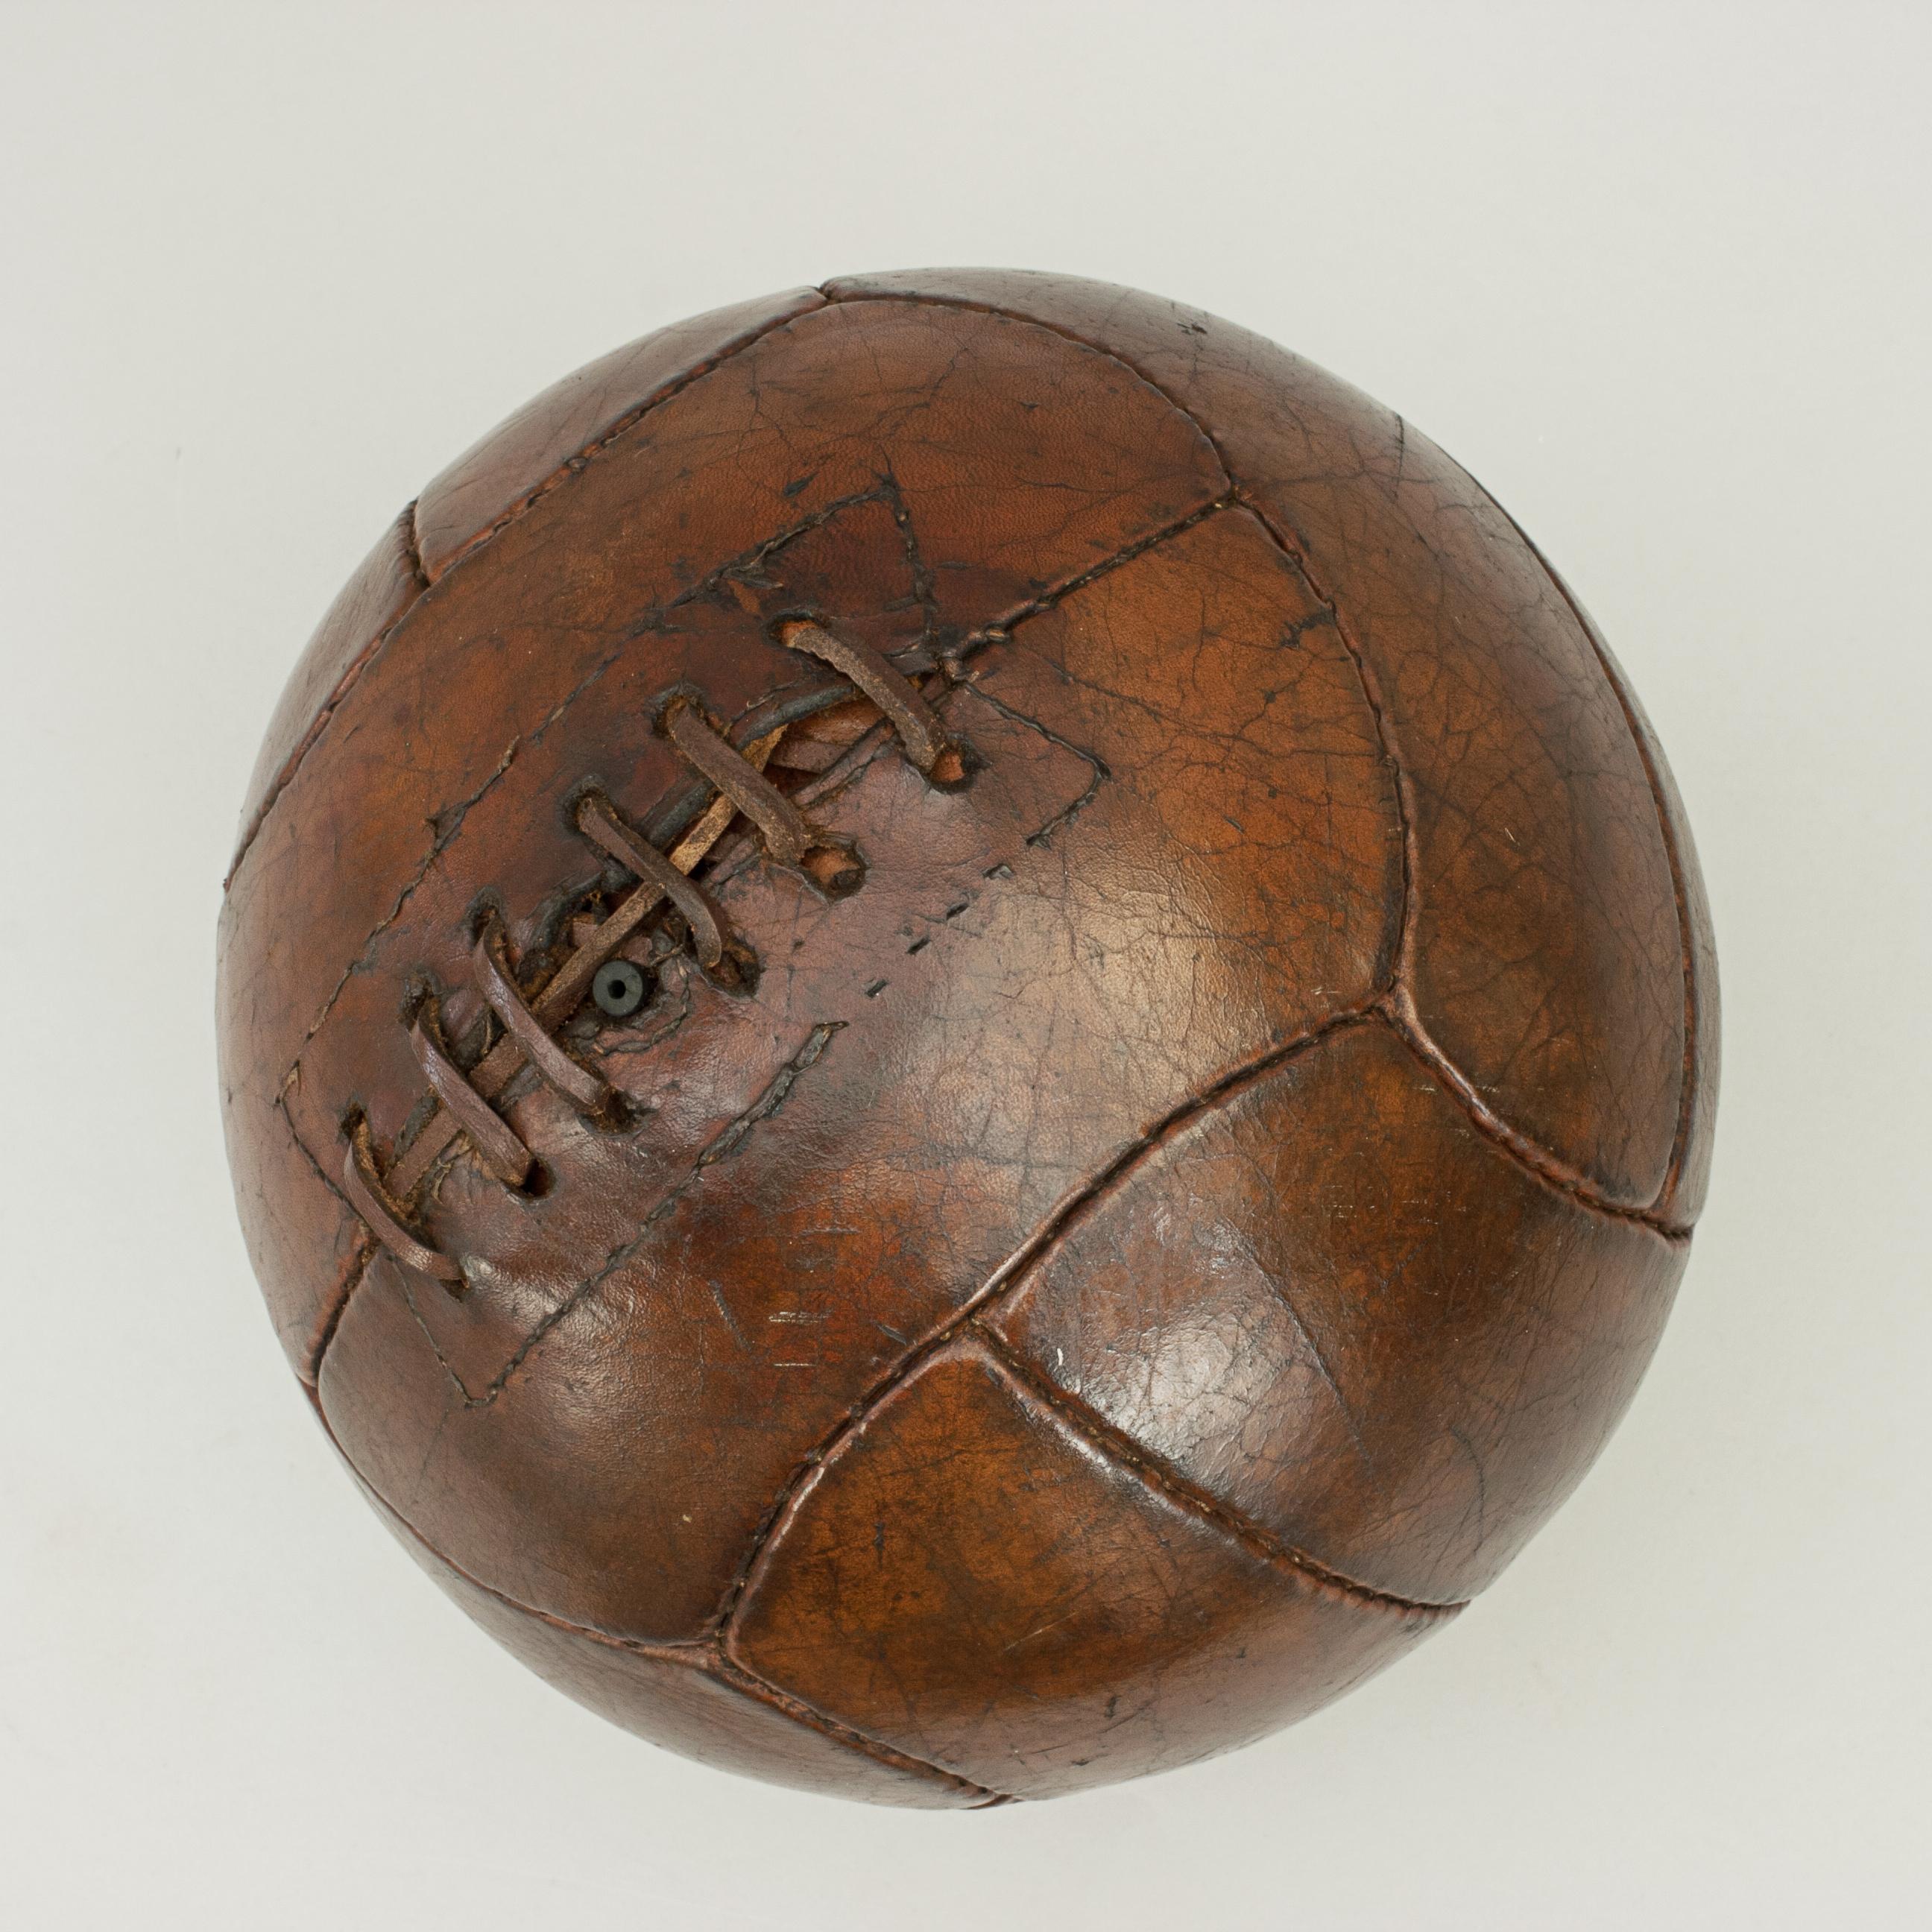 English Vintage 1940s Leather Football, Soccer Ball